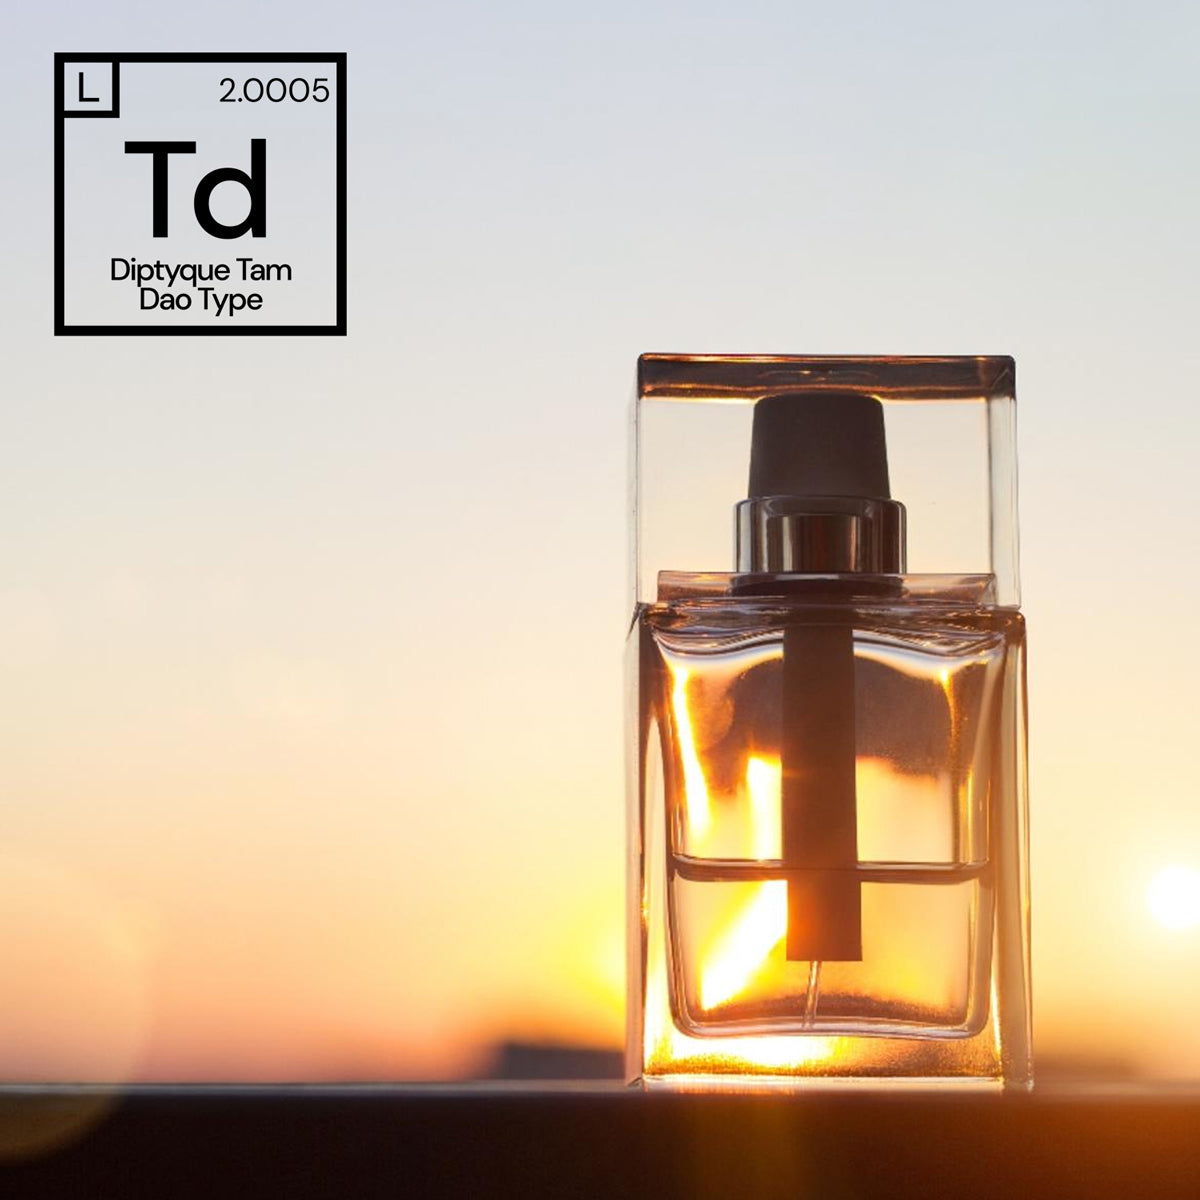 Diptyque Tam Dao Type Fragrance #2.0005 – Fragrances 2 Order Inc.